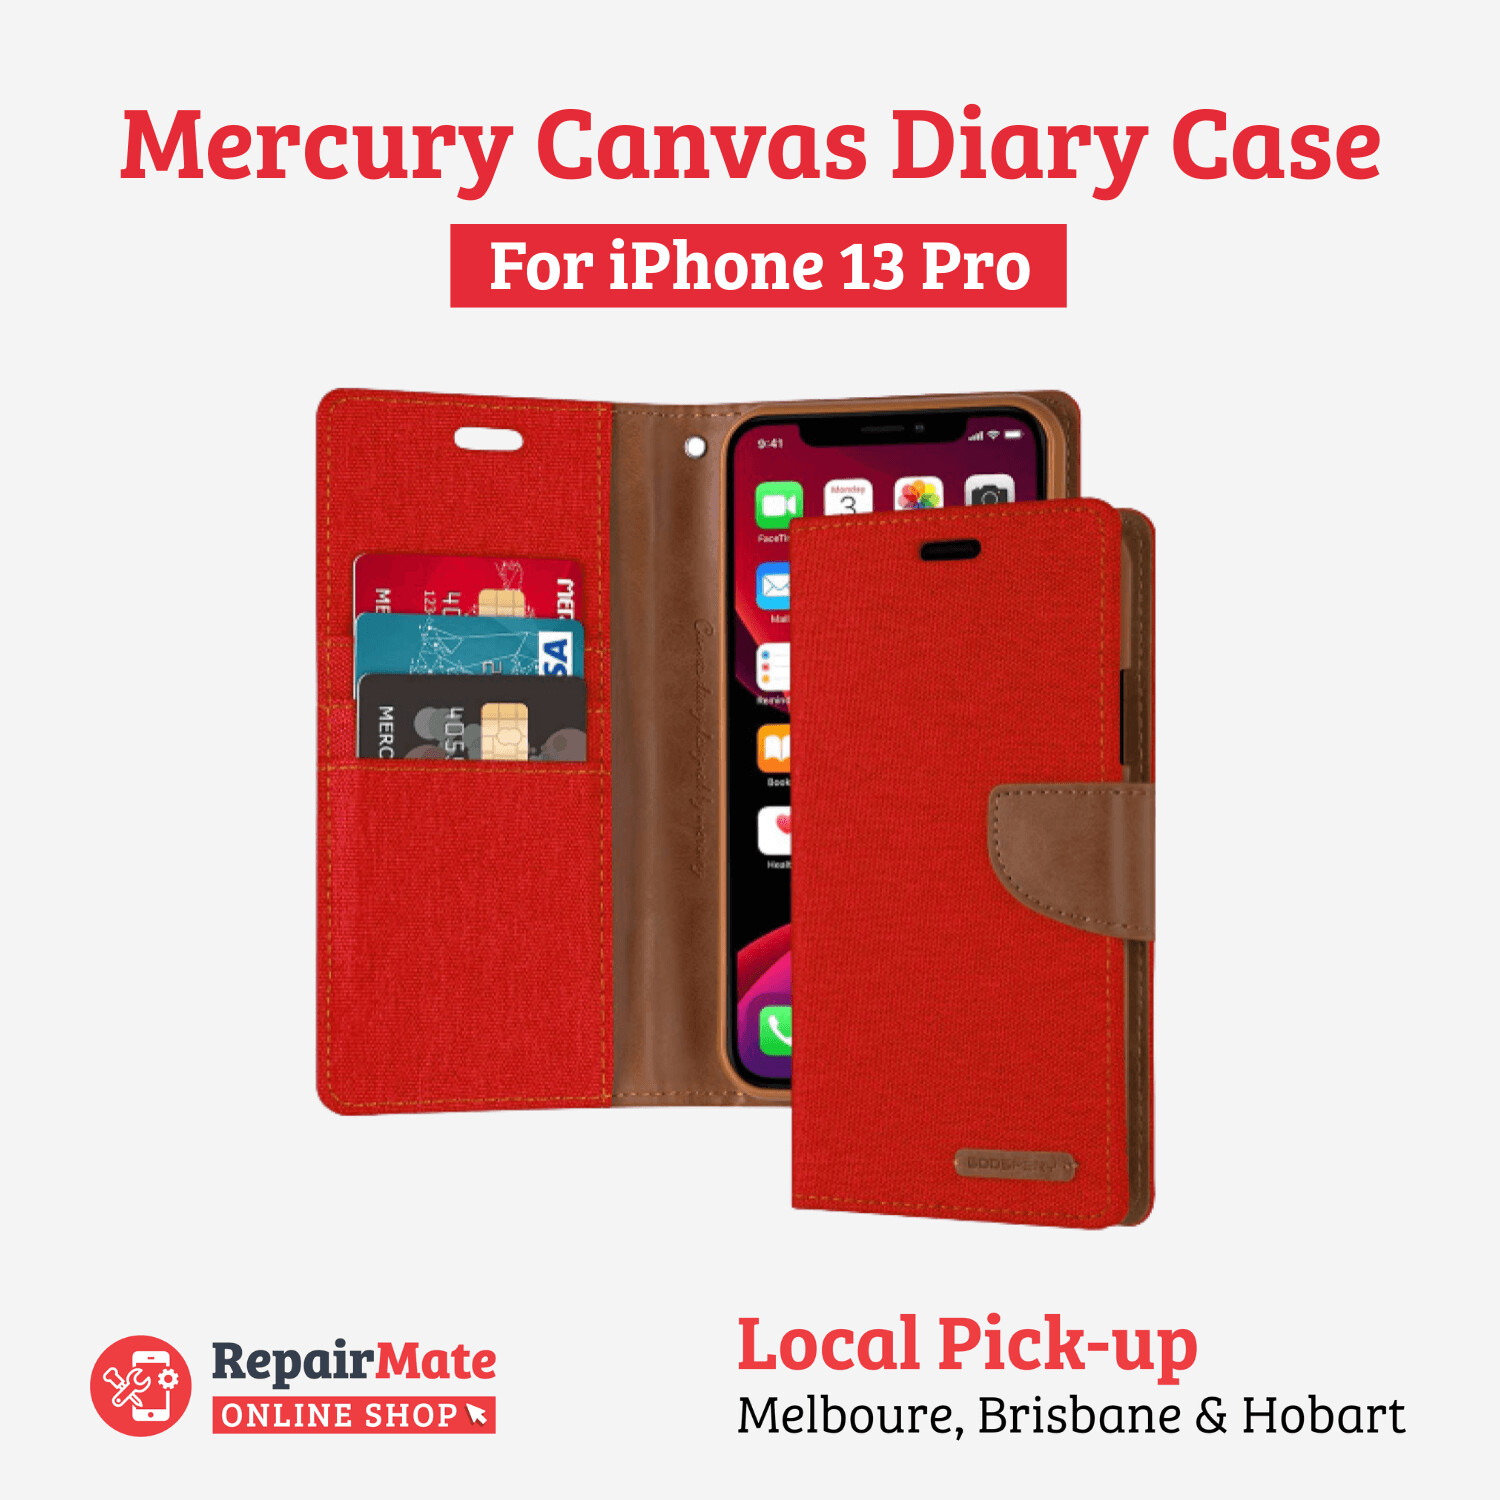 iPhone 13 Pro Mercury Canvas Foldable Diary Case